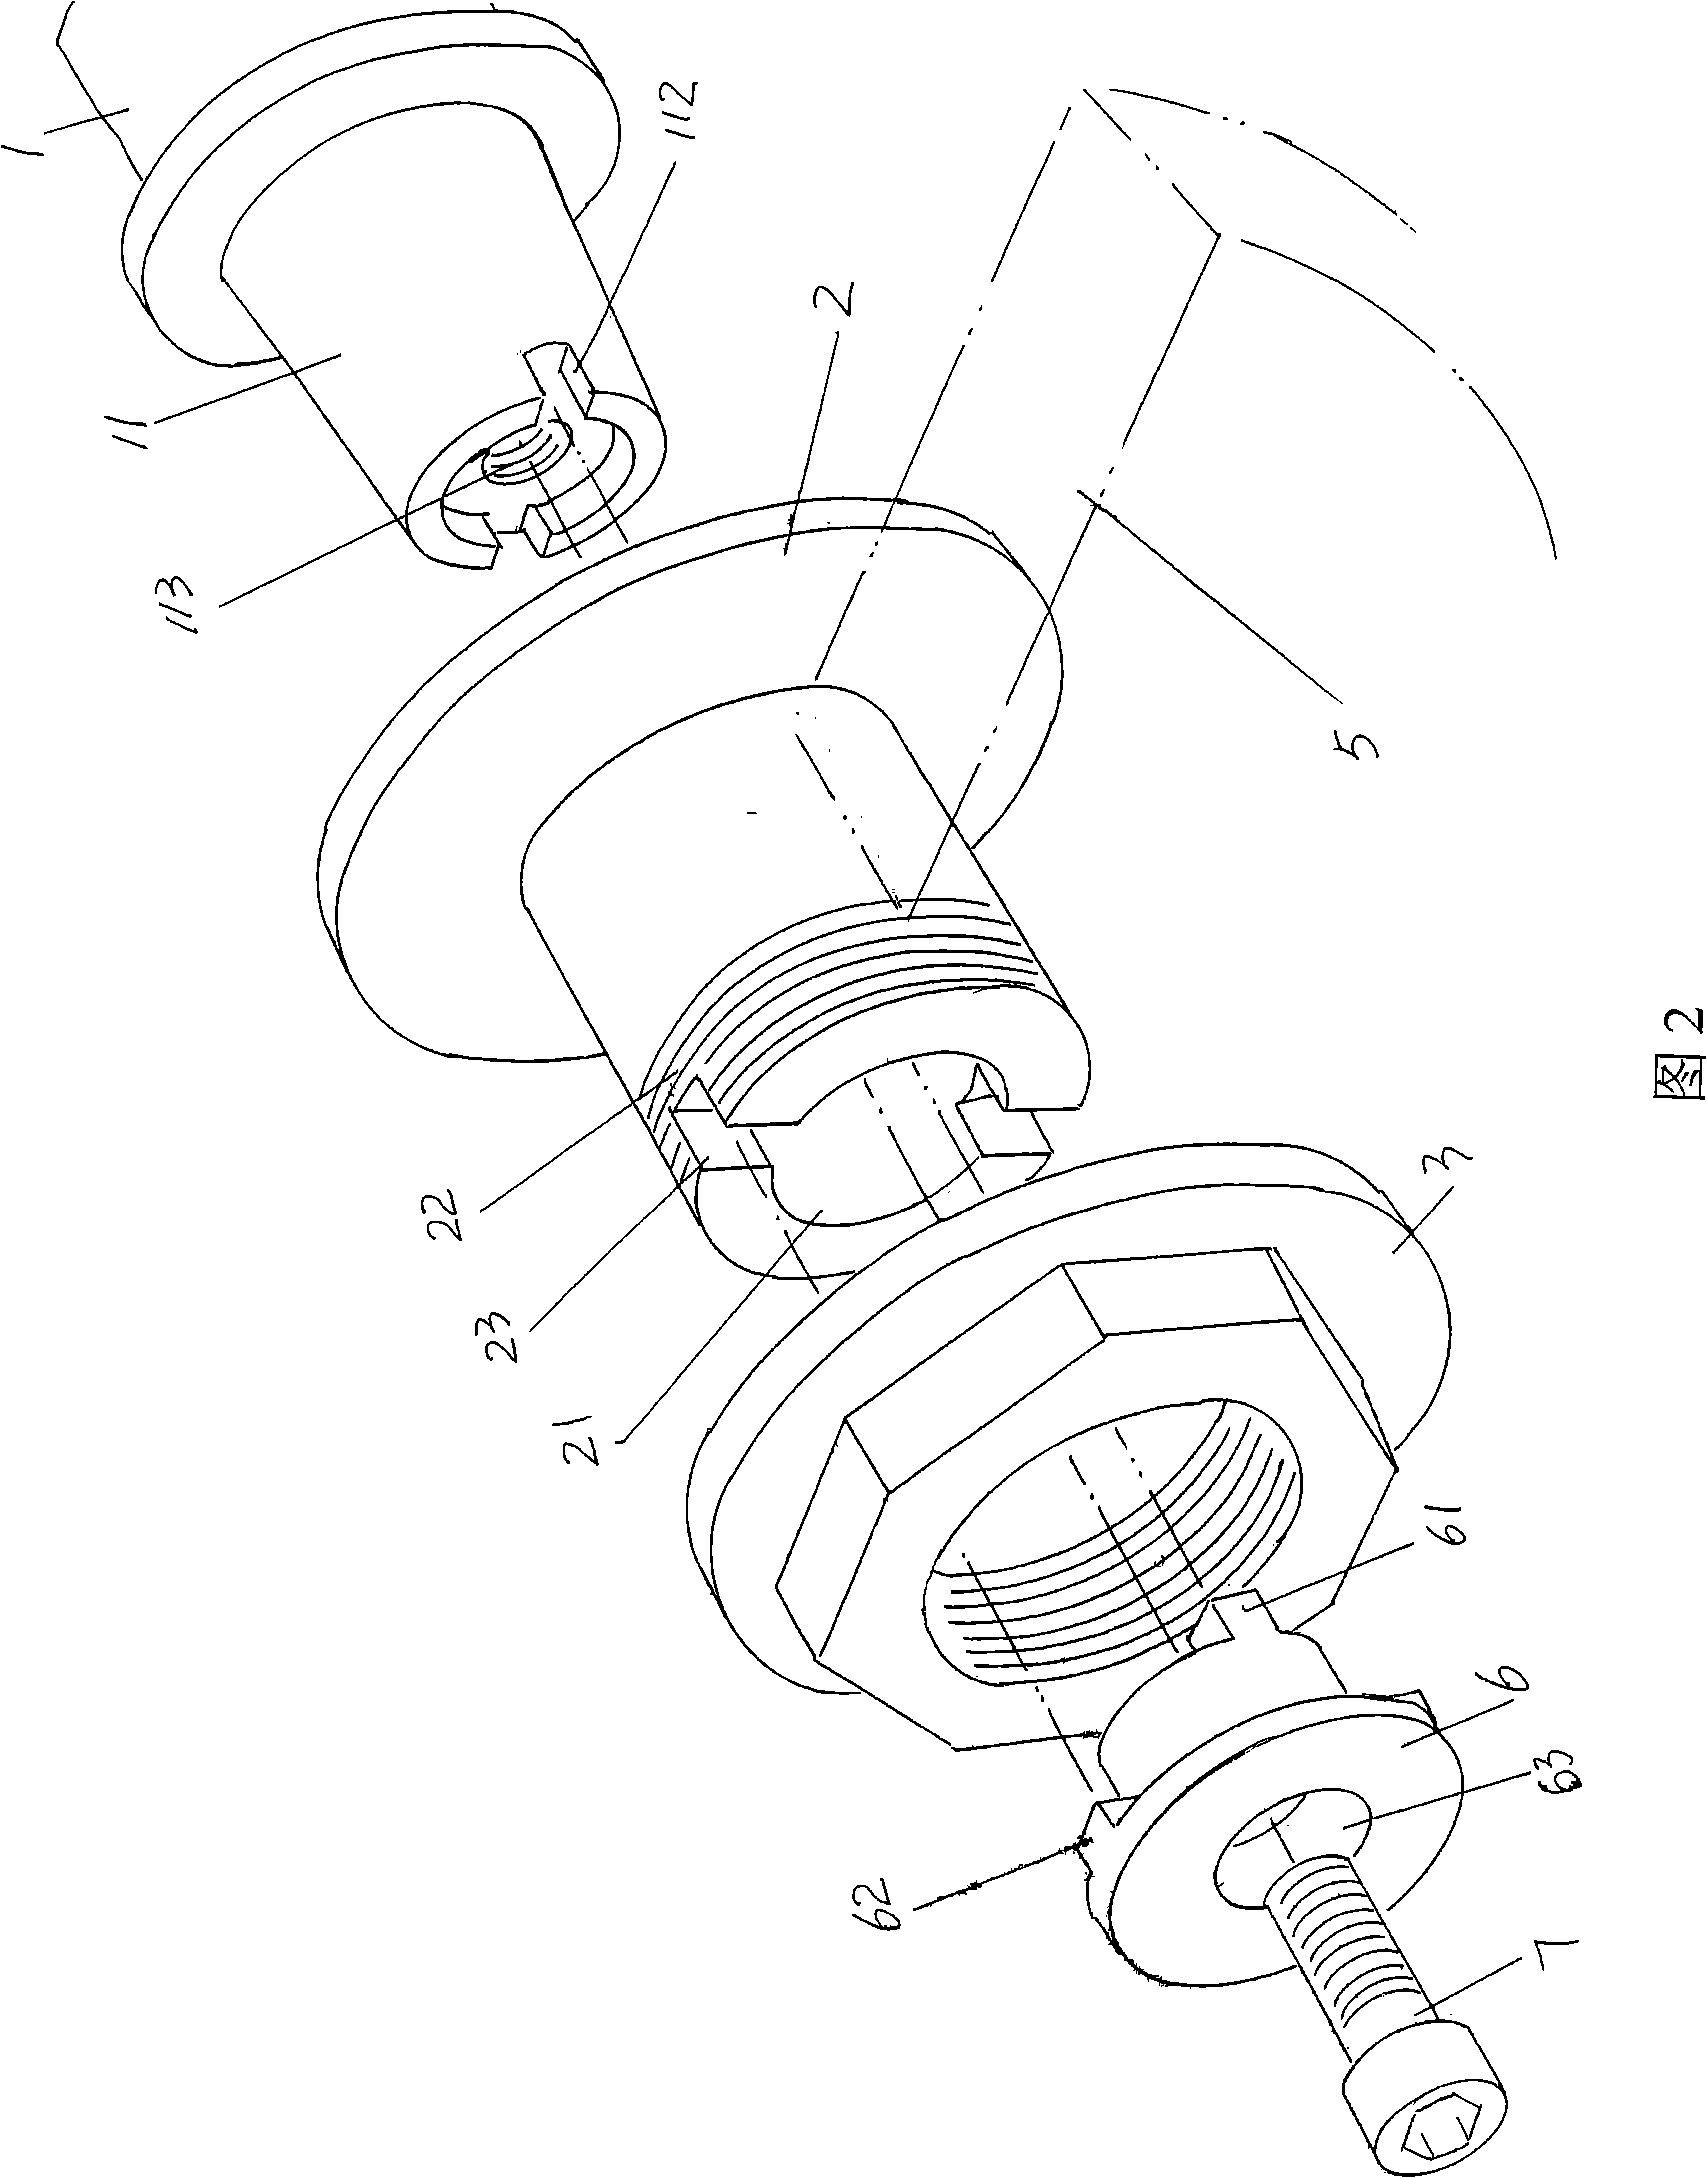 Grinding machine spindle end mechanism